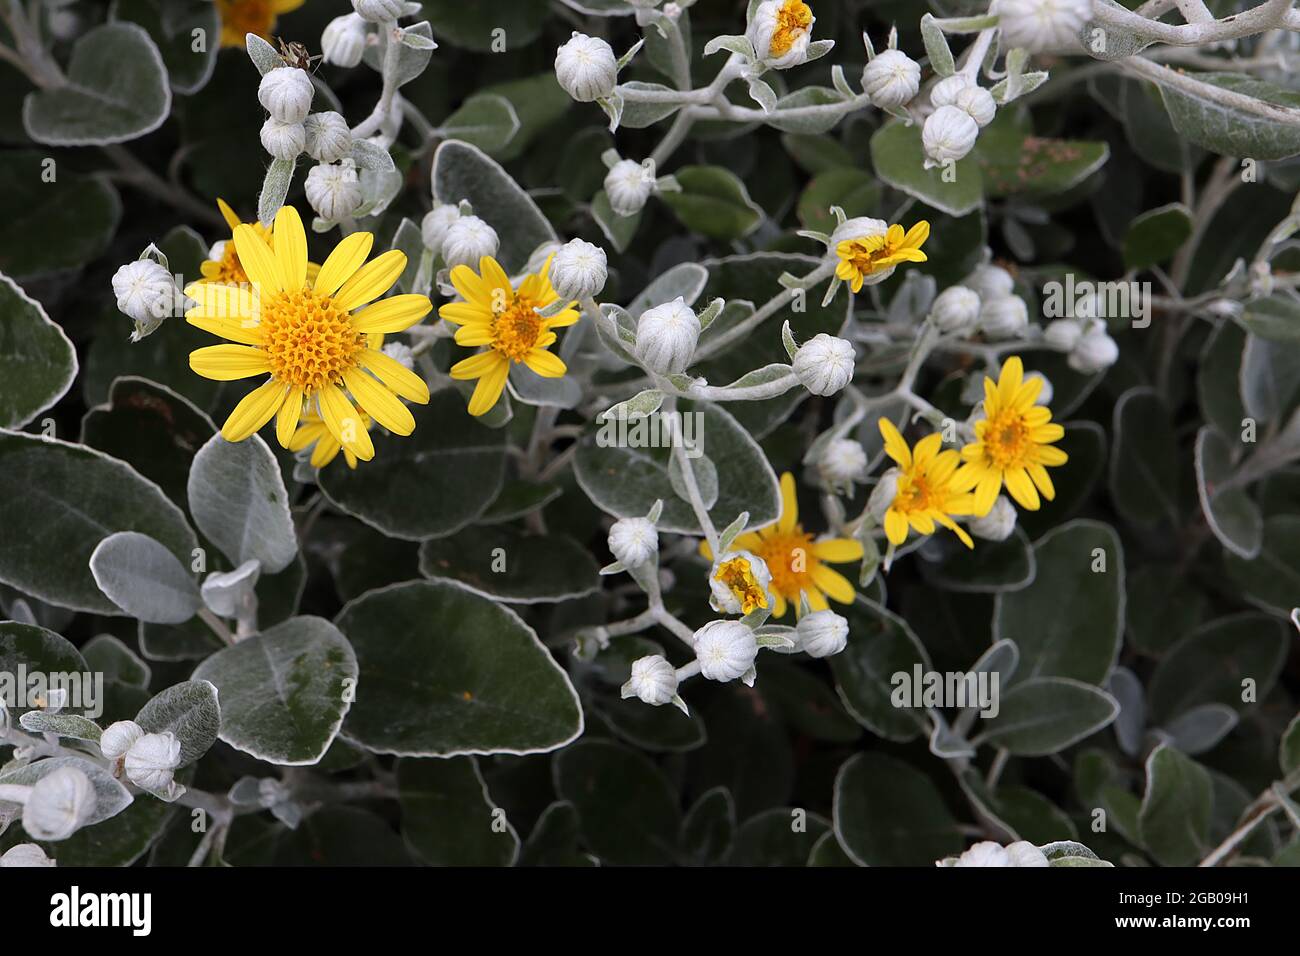 Brachyglottis / Senecio greyi ‘Sunshine’ Daisy bush – yellow daisies and silver green leaves, June, England, UK Stock Photo